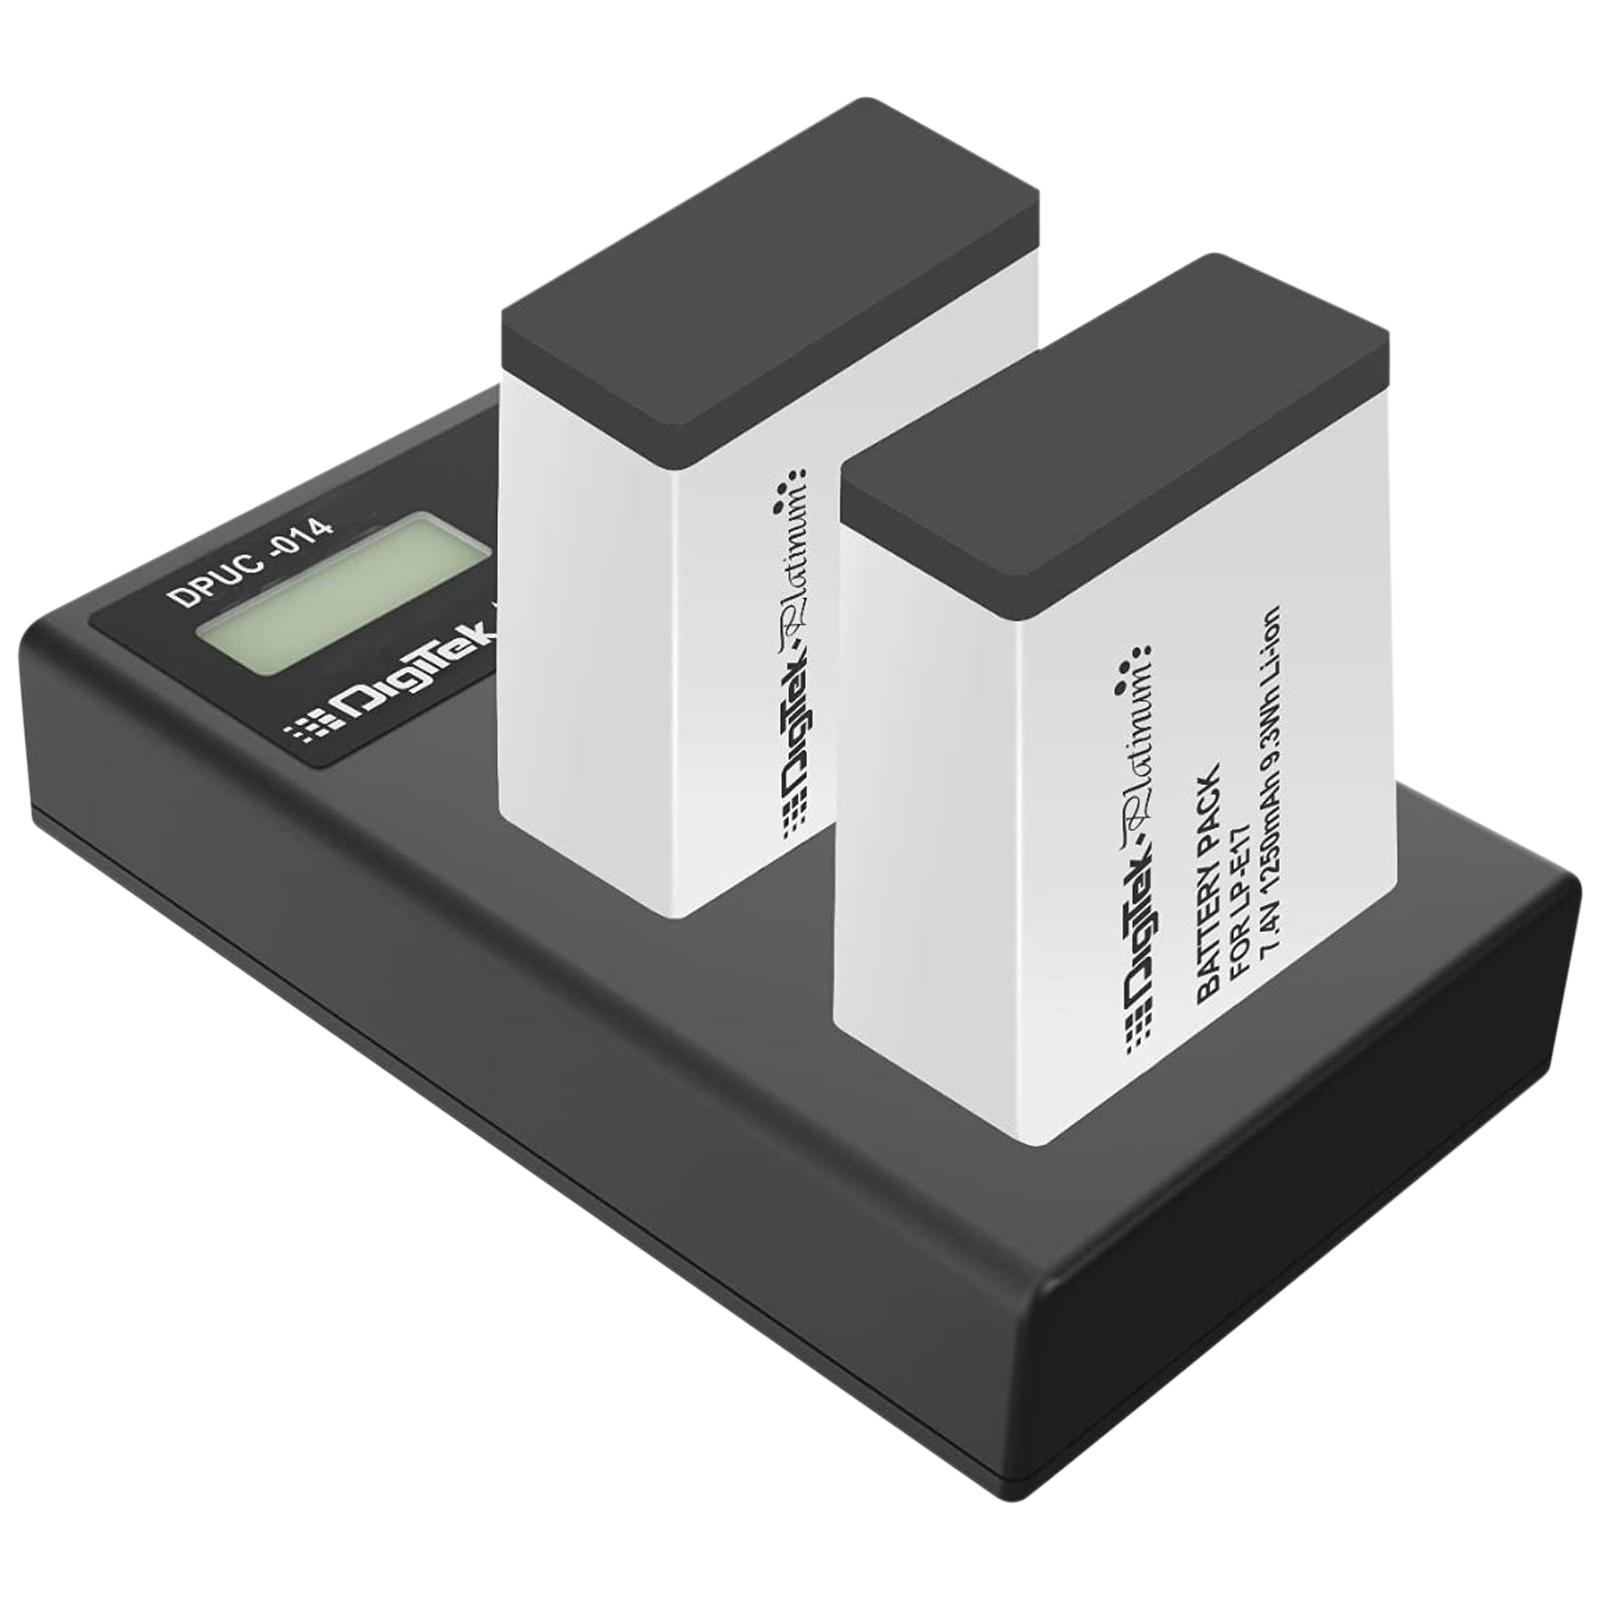 DigiTek Platinum DPUC 014D Camera Battery Charger Combo for LP-E17 (2-Ports)